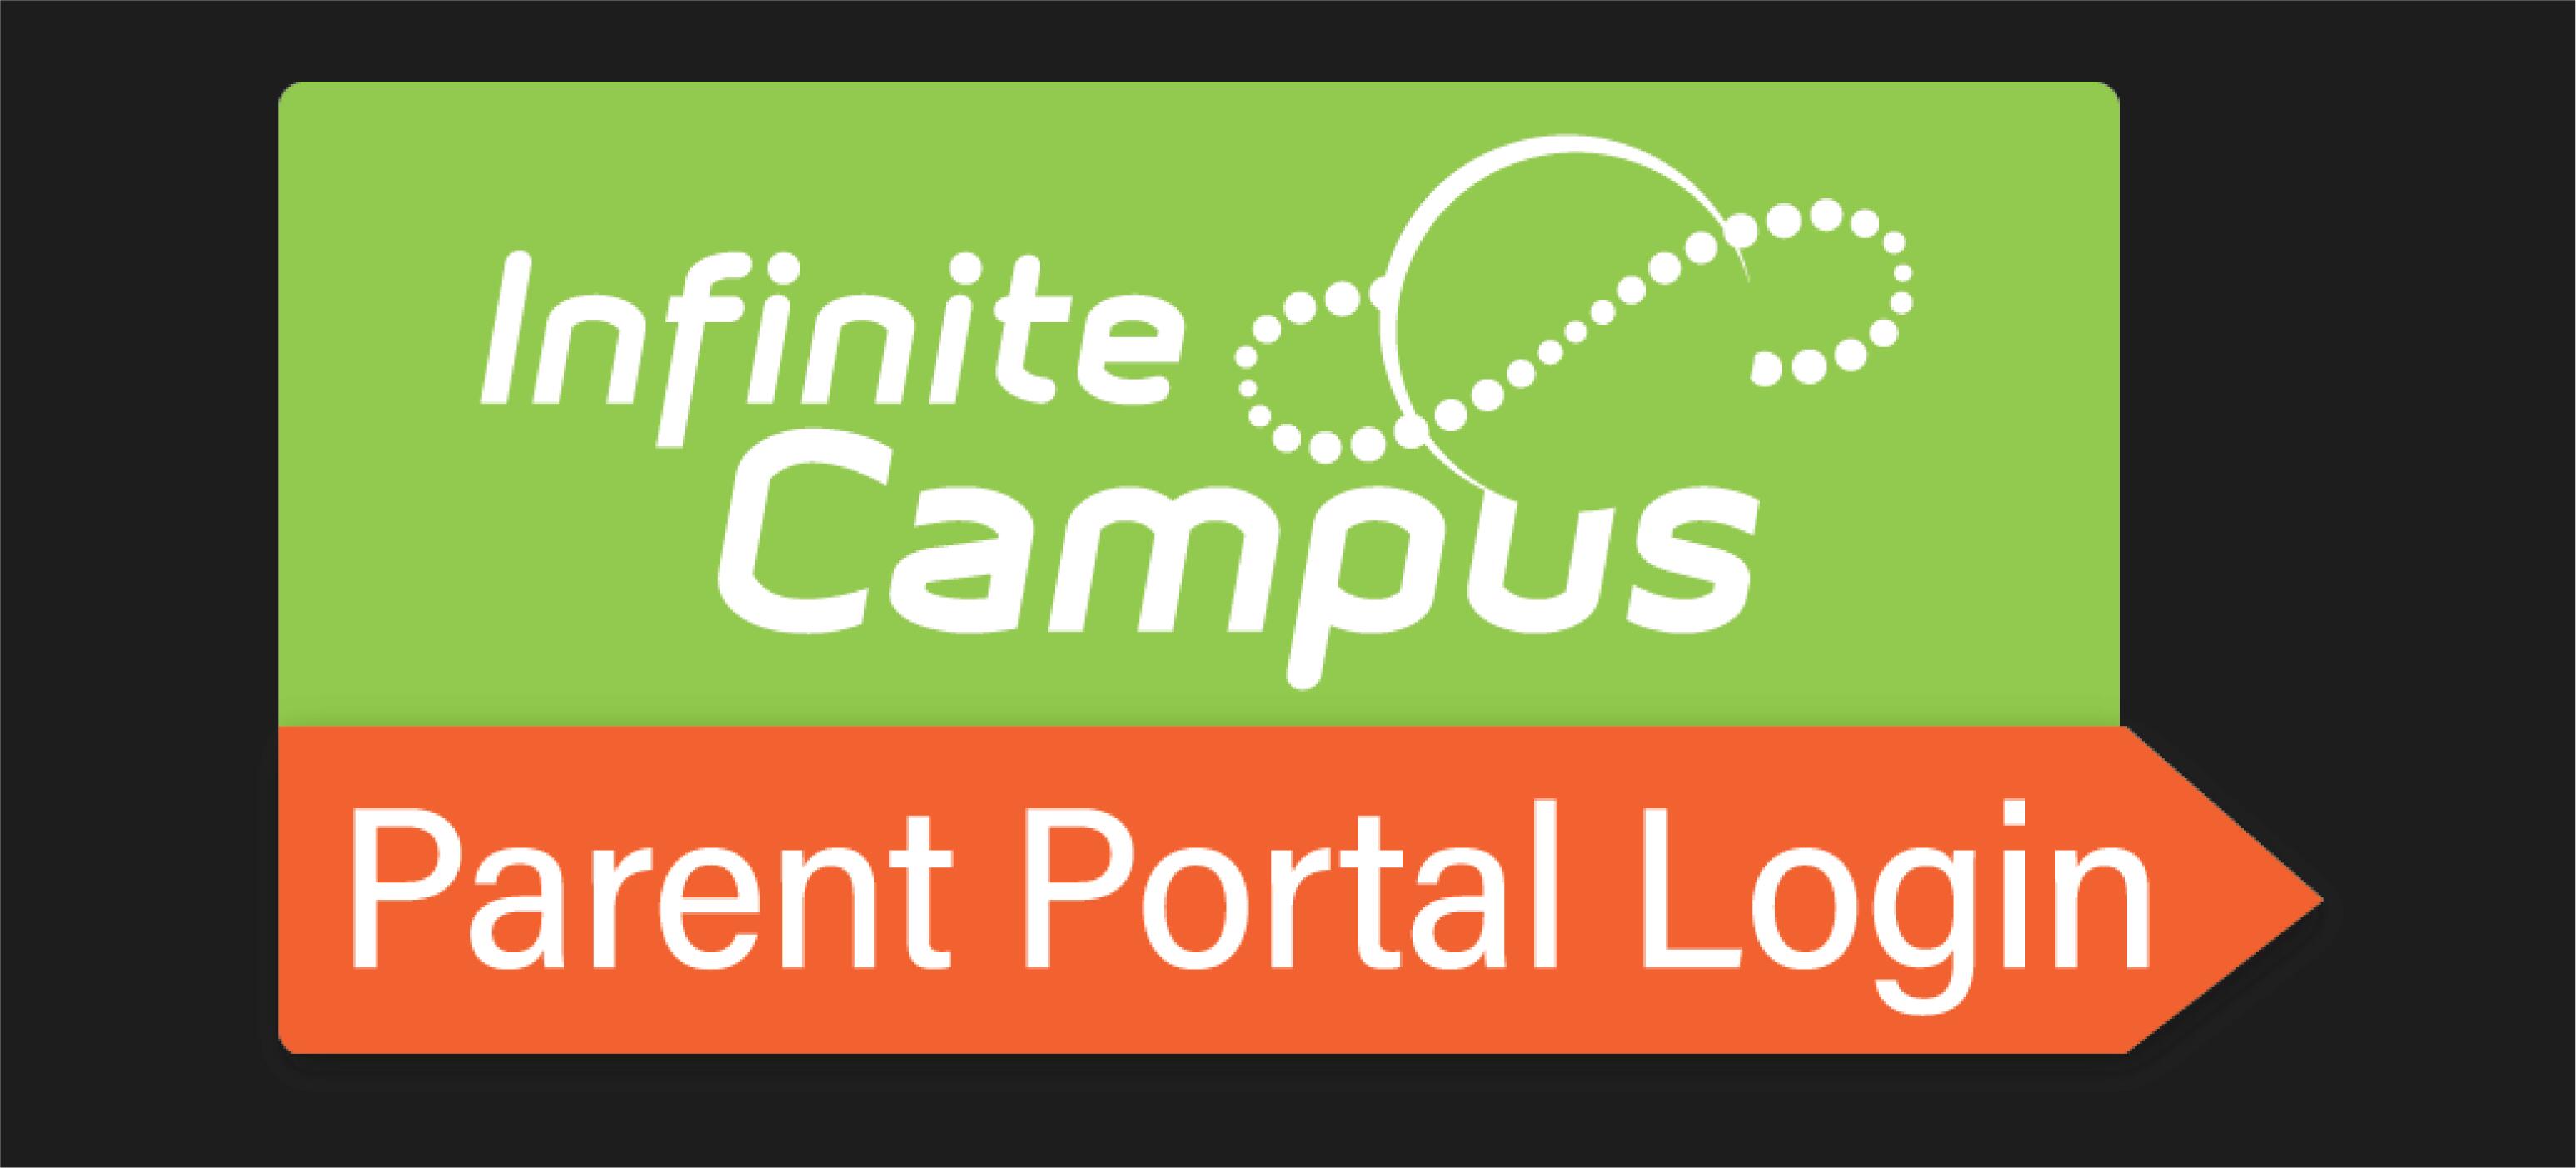 Infinite Campus - Parent Portal Login button